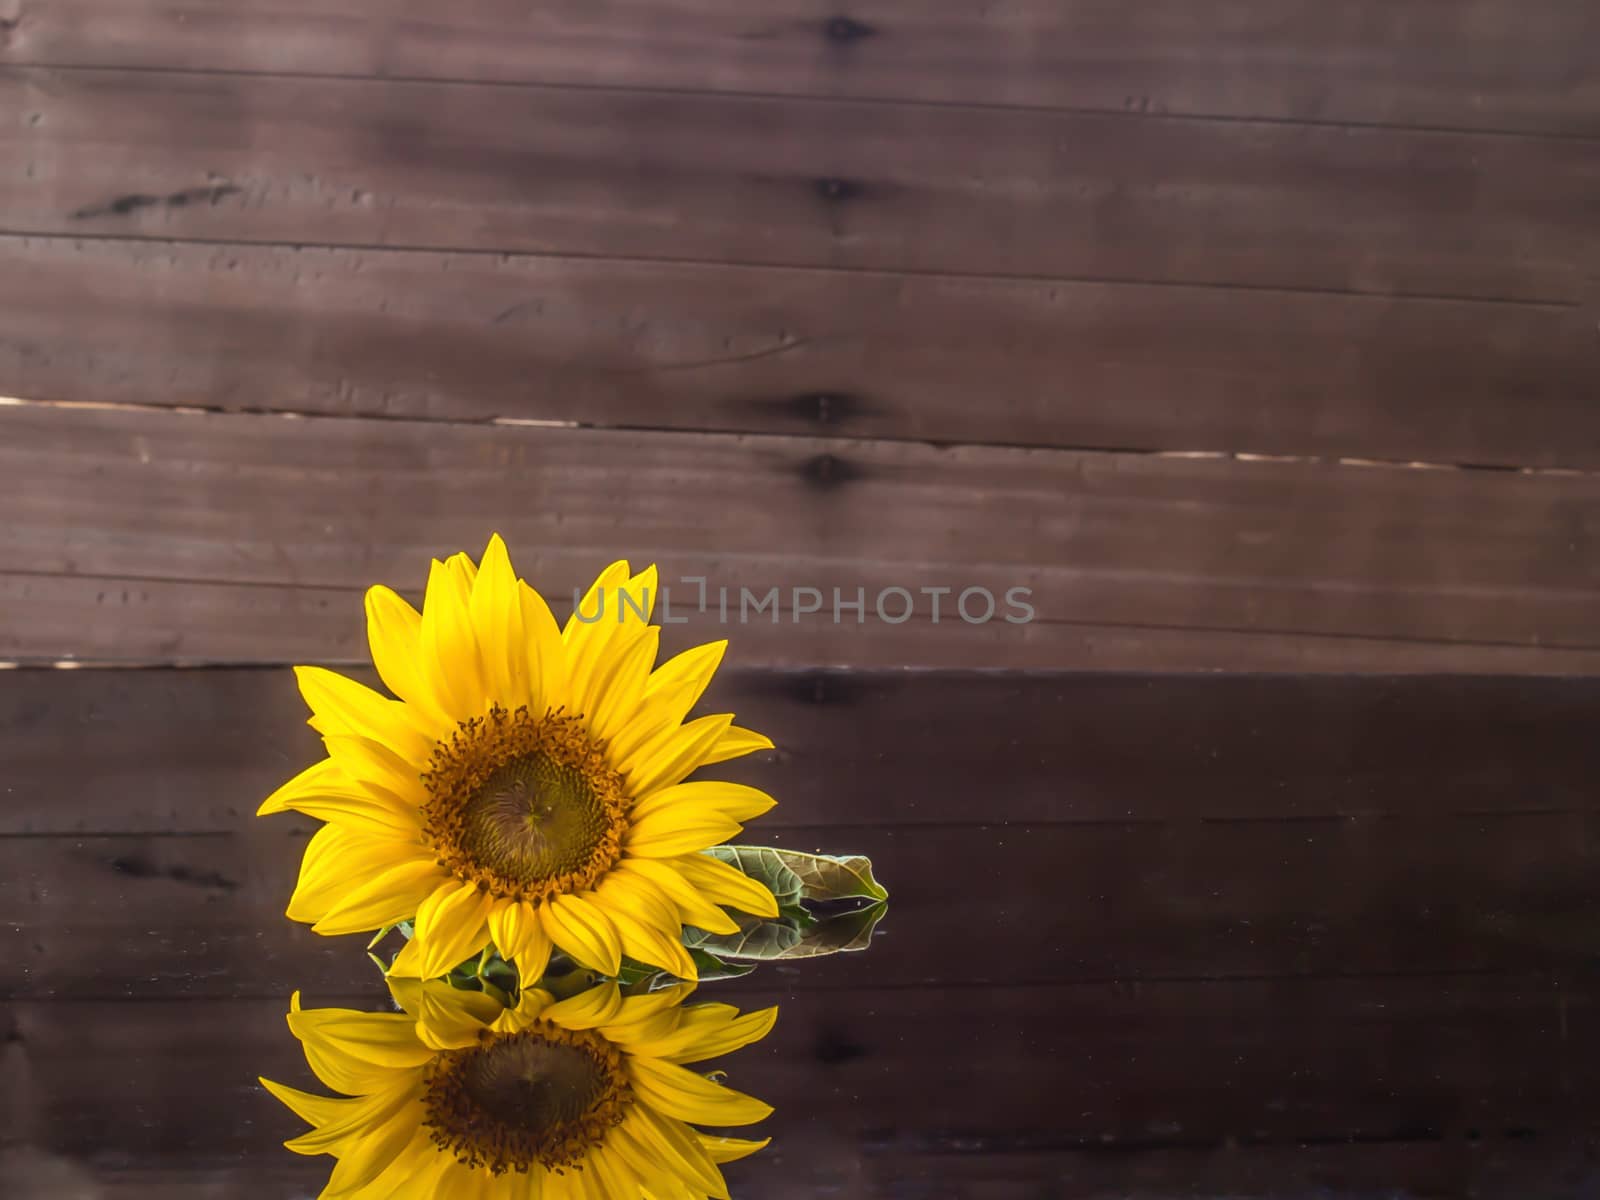 yellow sunflower by wmitrmatr